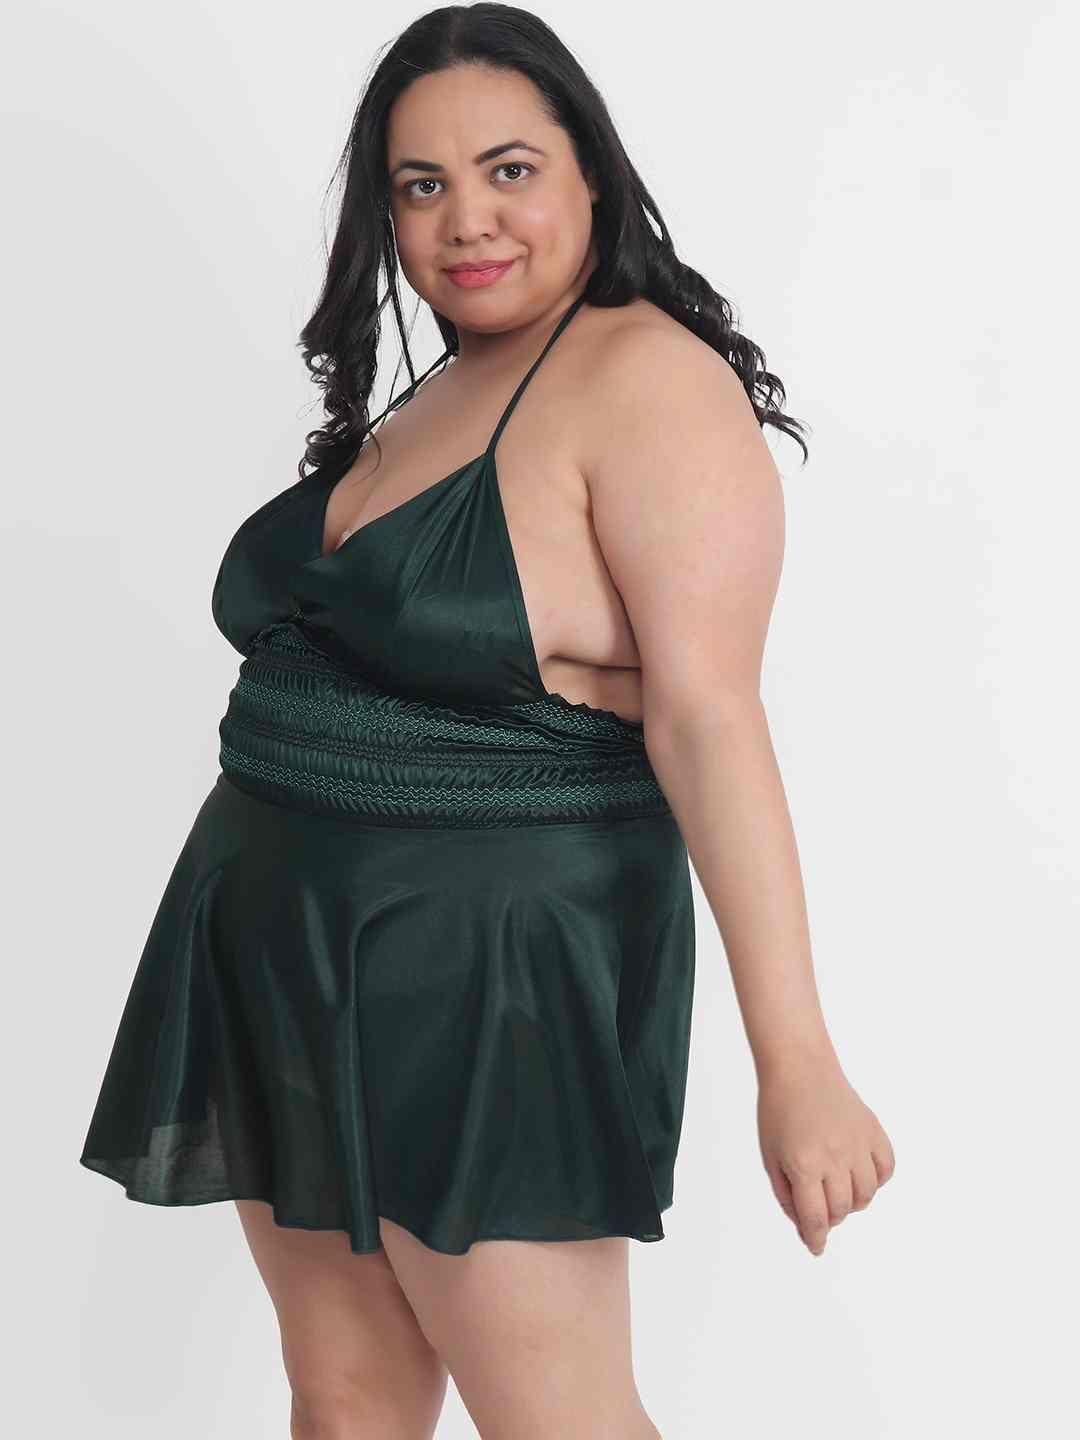 Plus Size Hot Short Green Bikini Dress for Honeymoon BB35Gb